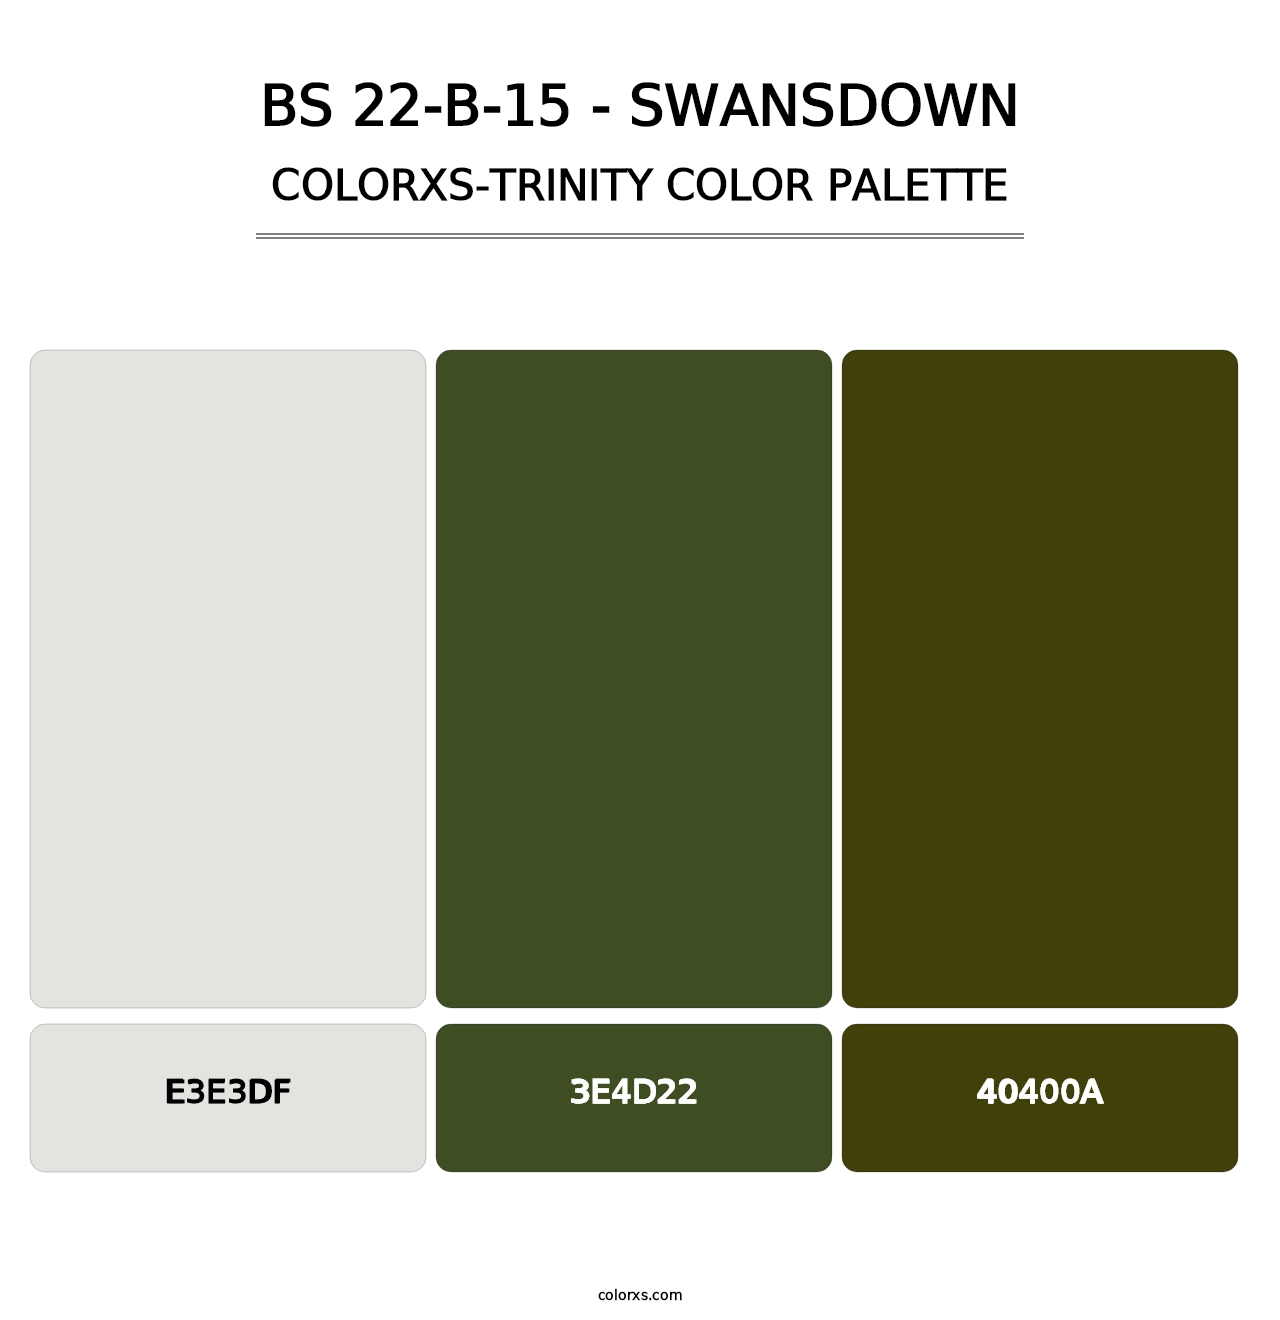 BS 22-B-15 - Swansdown - Colorxs Trinity Palette